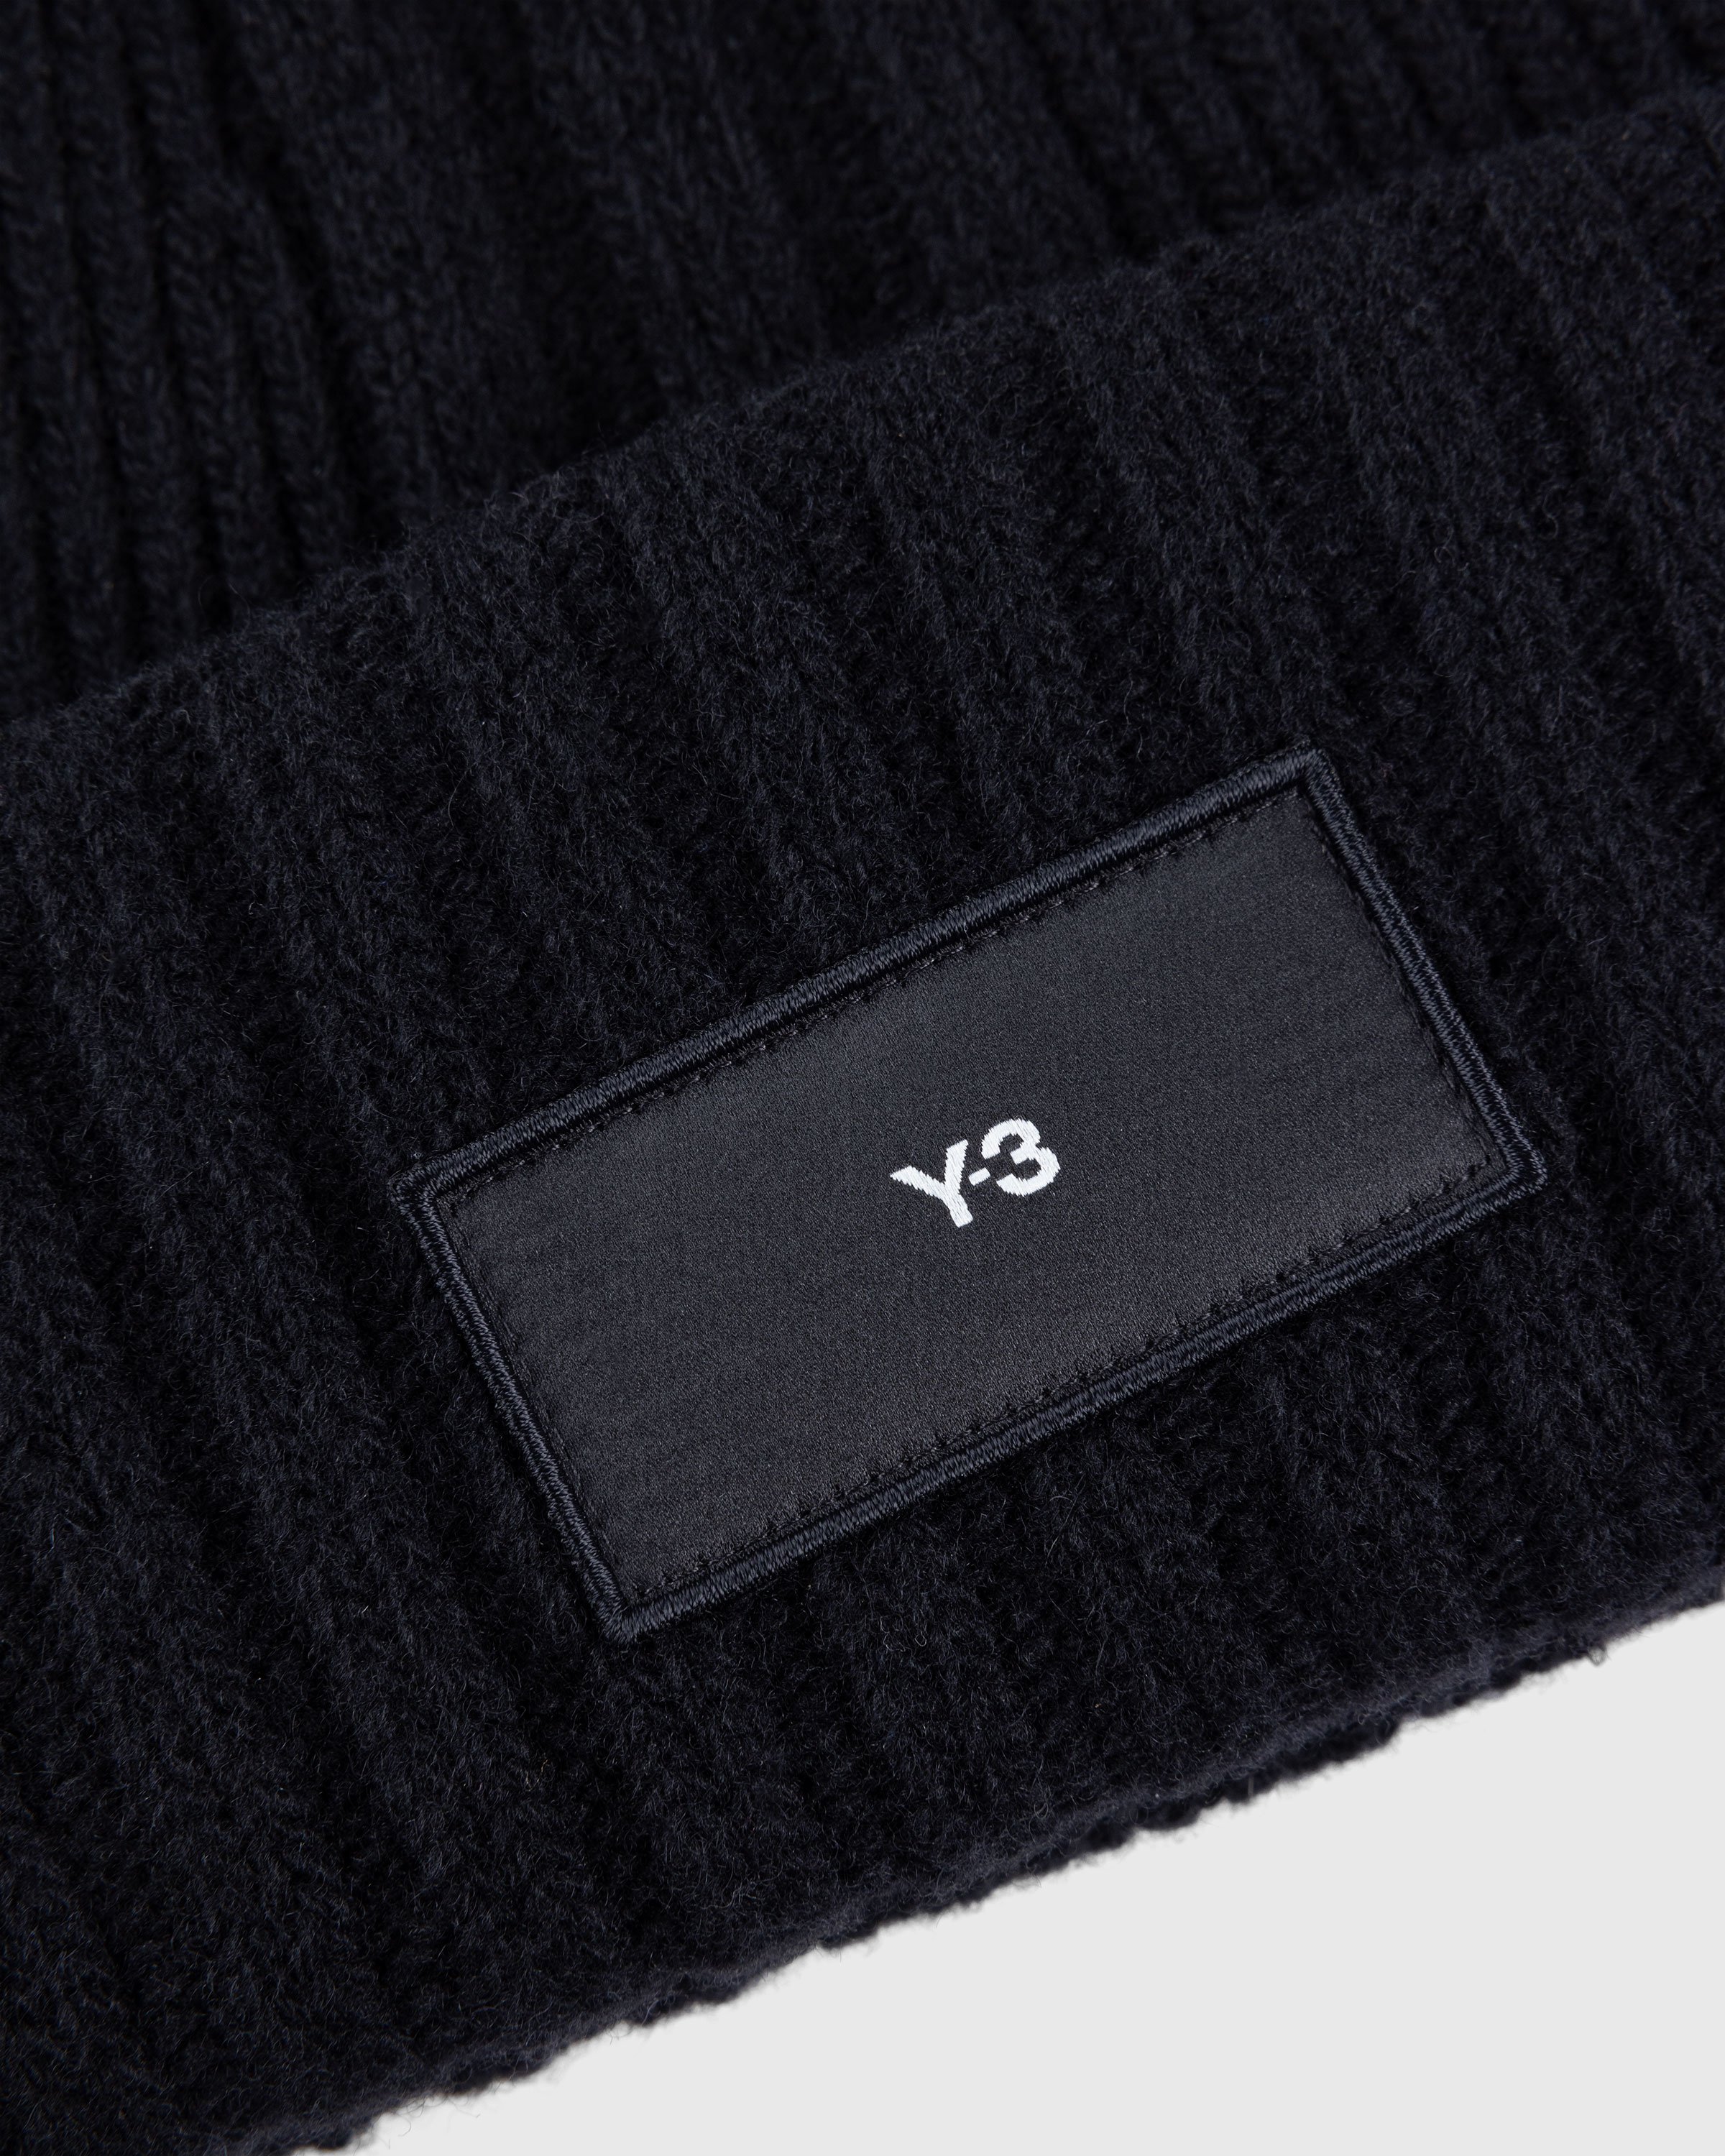 Y-3 - Logo Patch Beanie Black - Accessories - Black - Image 4